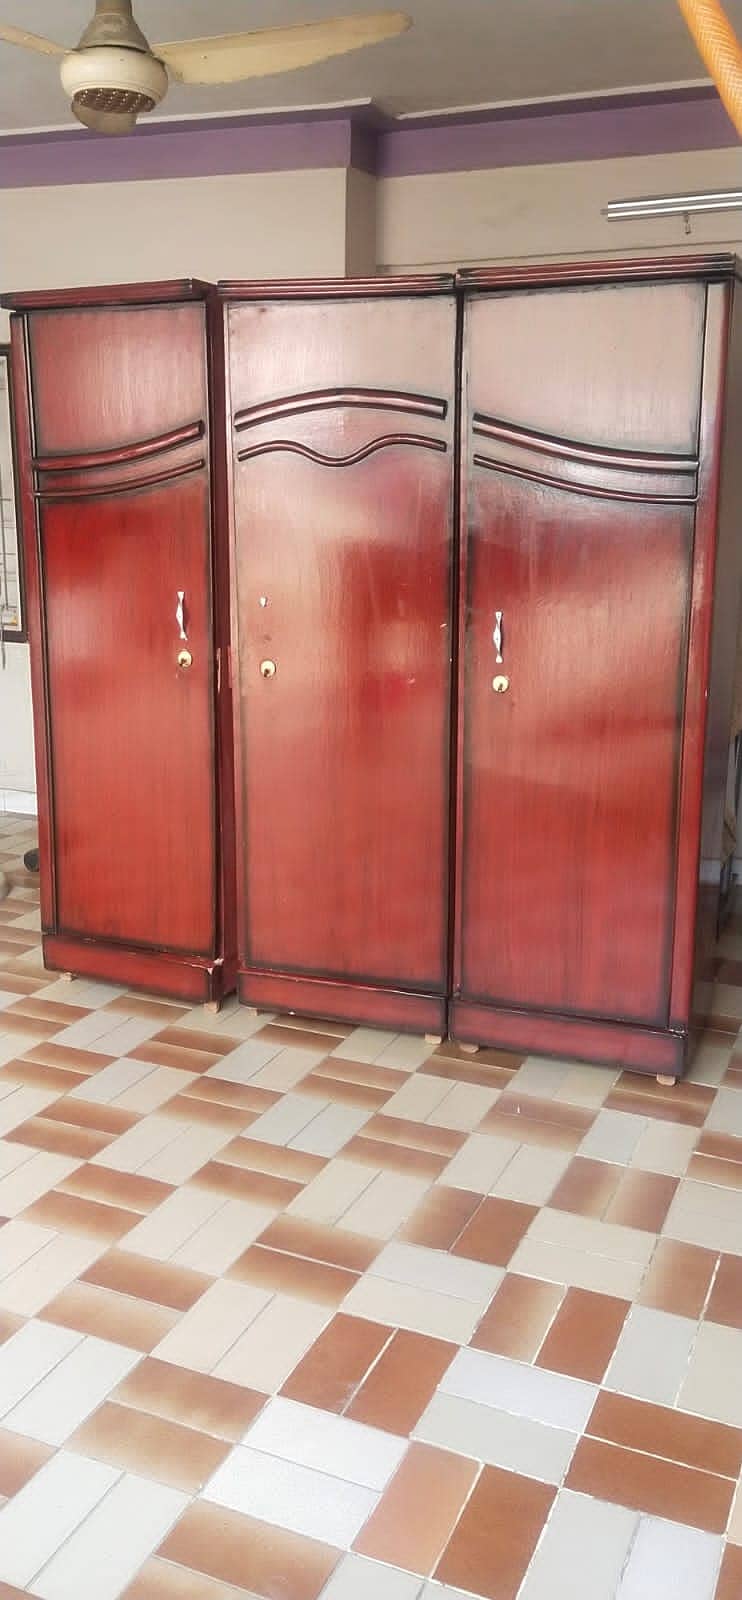 3door wardrobe for sale in excellent condition 2